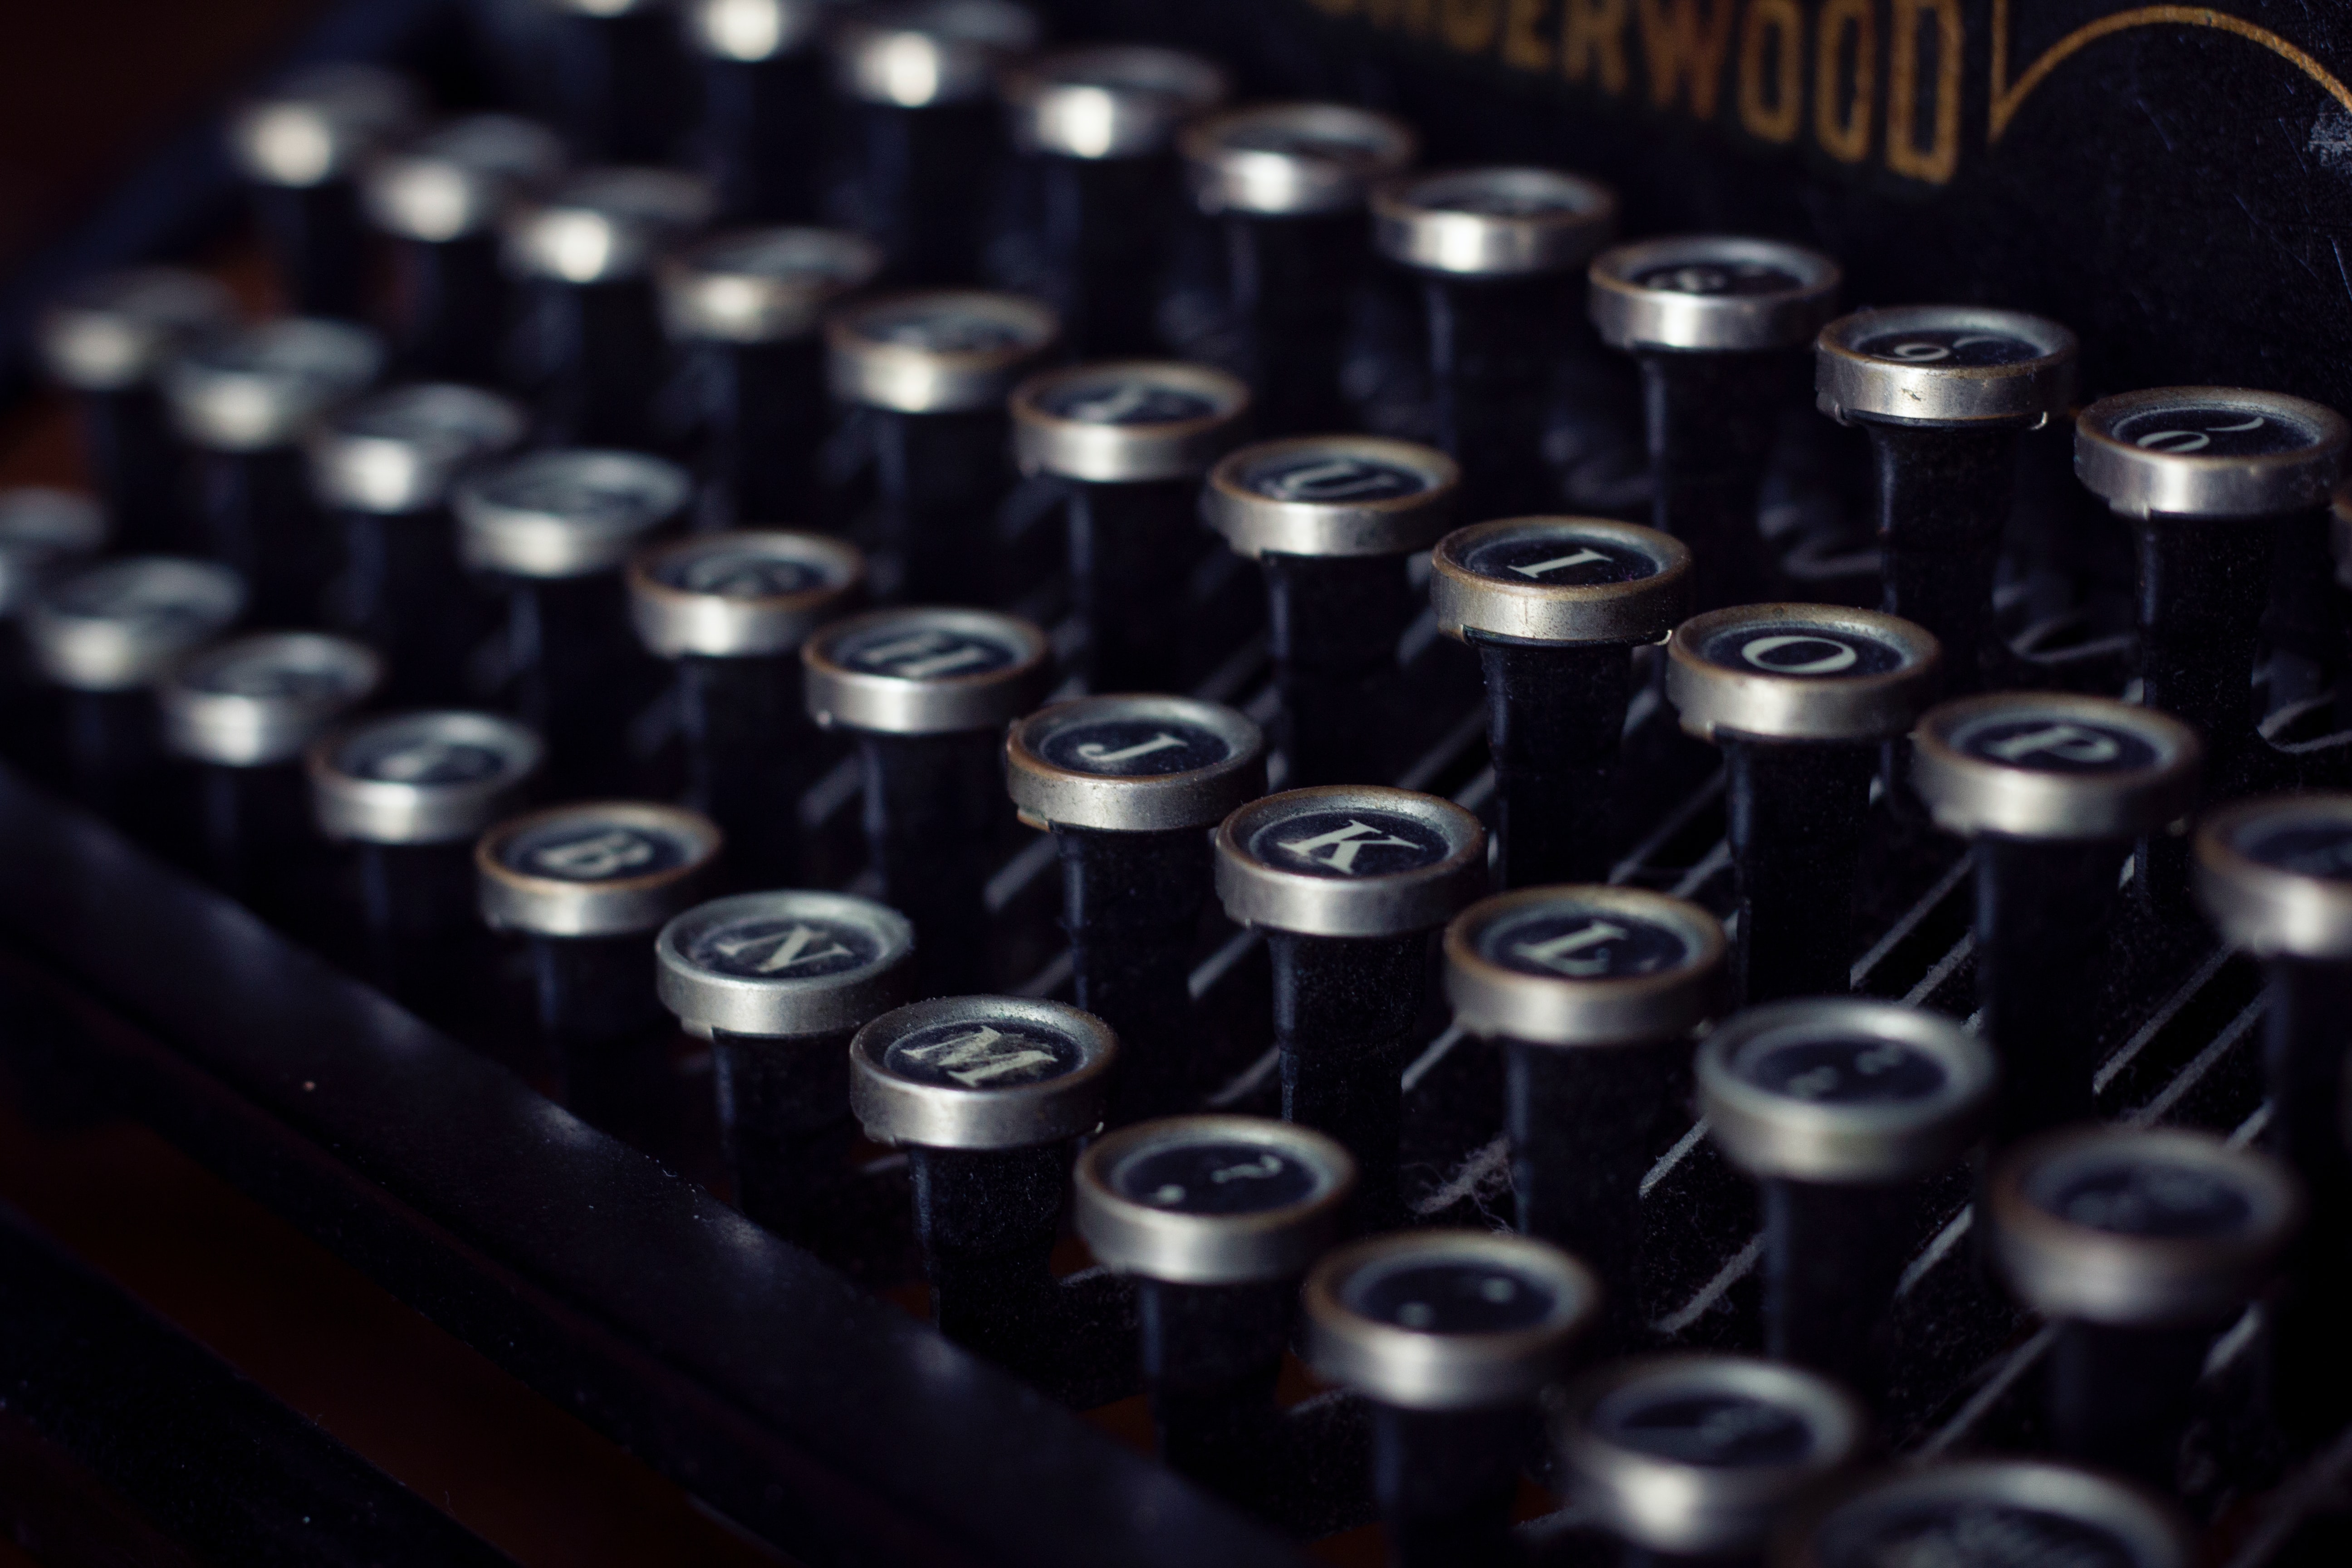 A close up image of a typewriter.